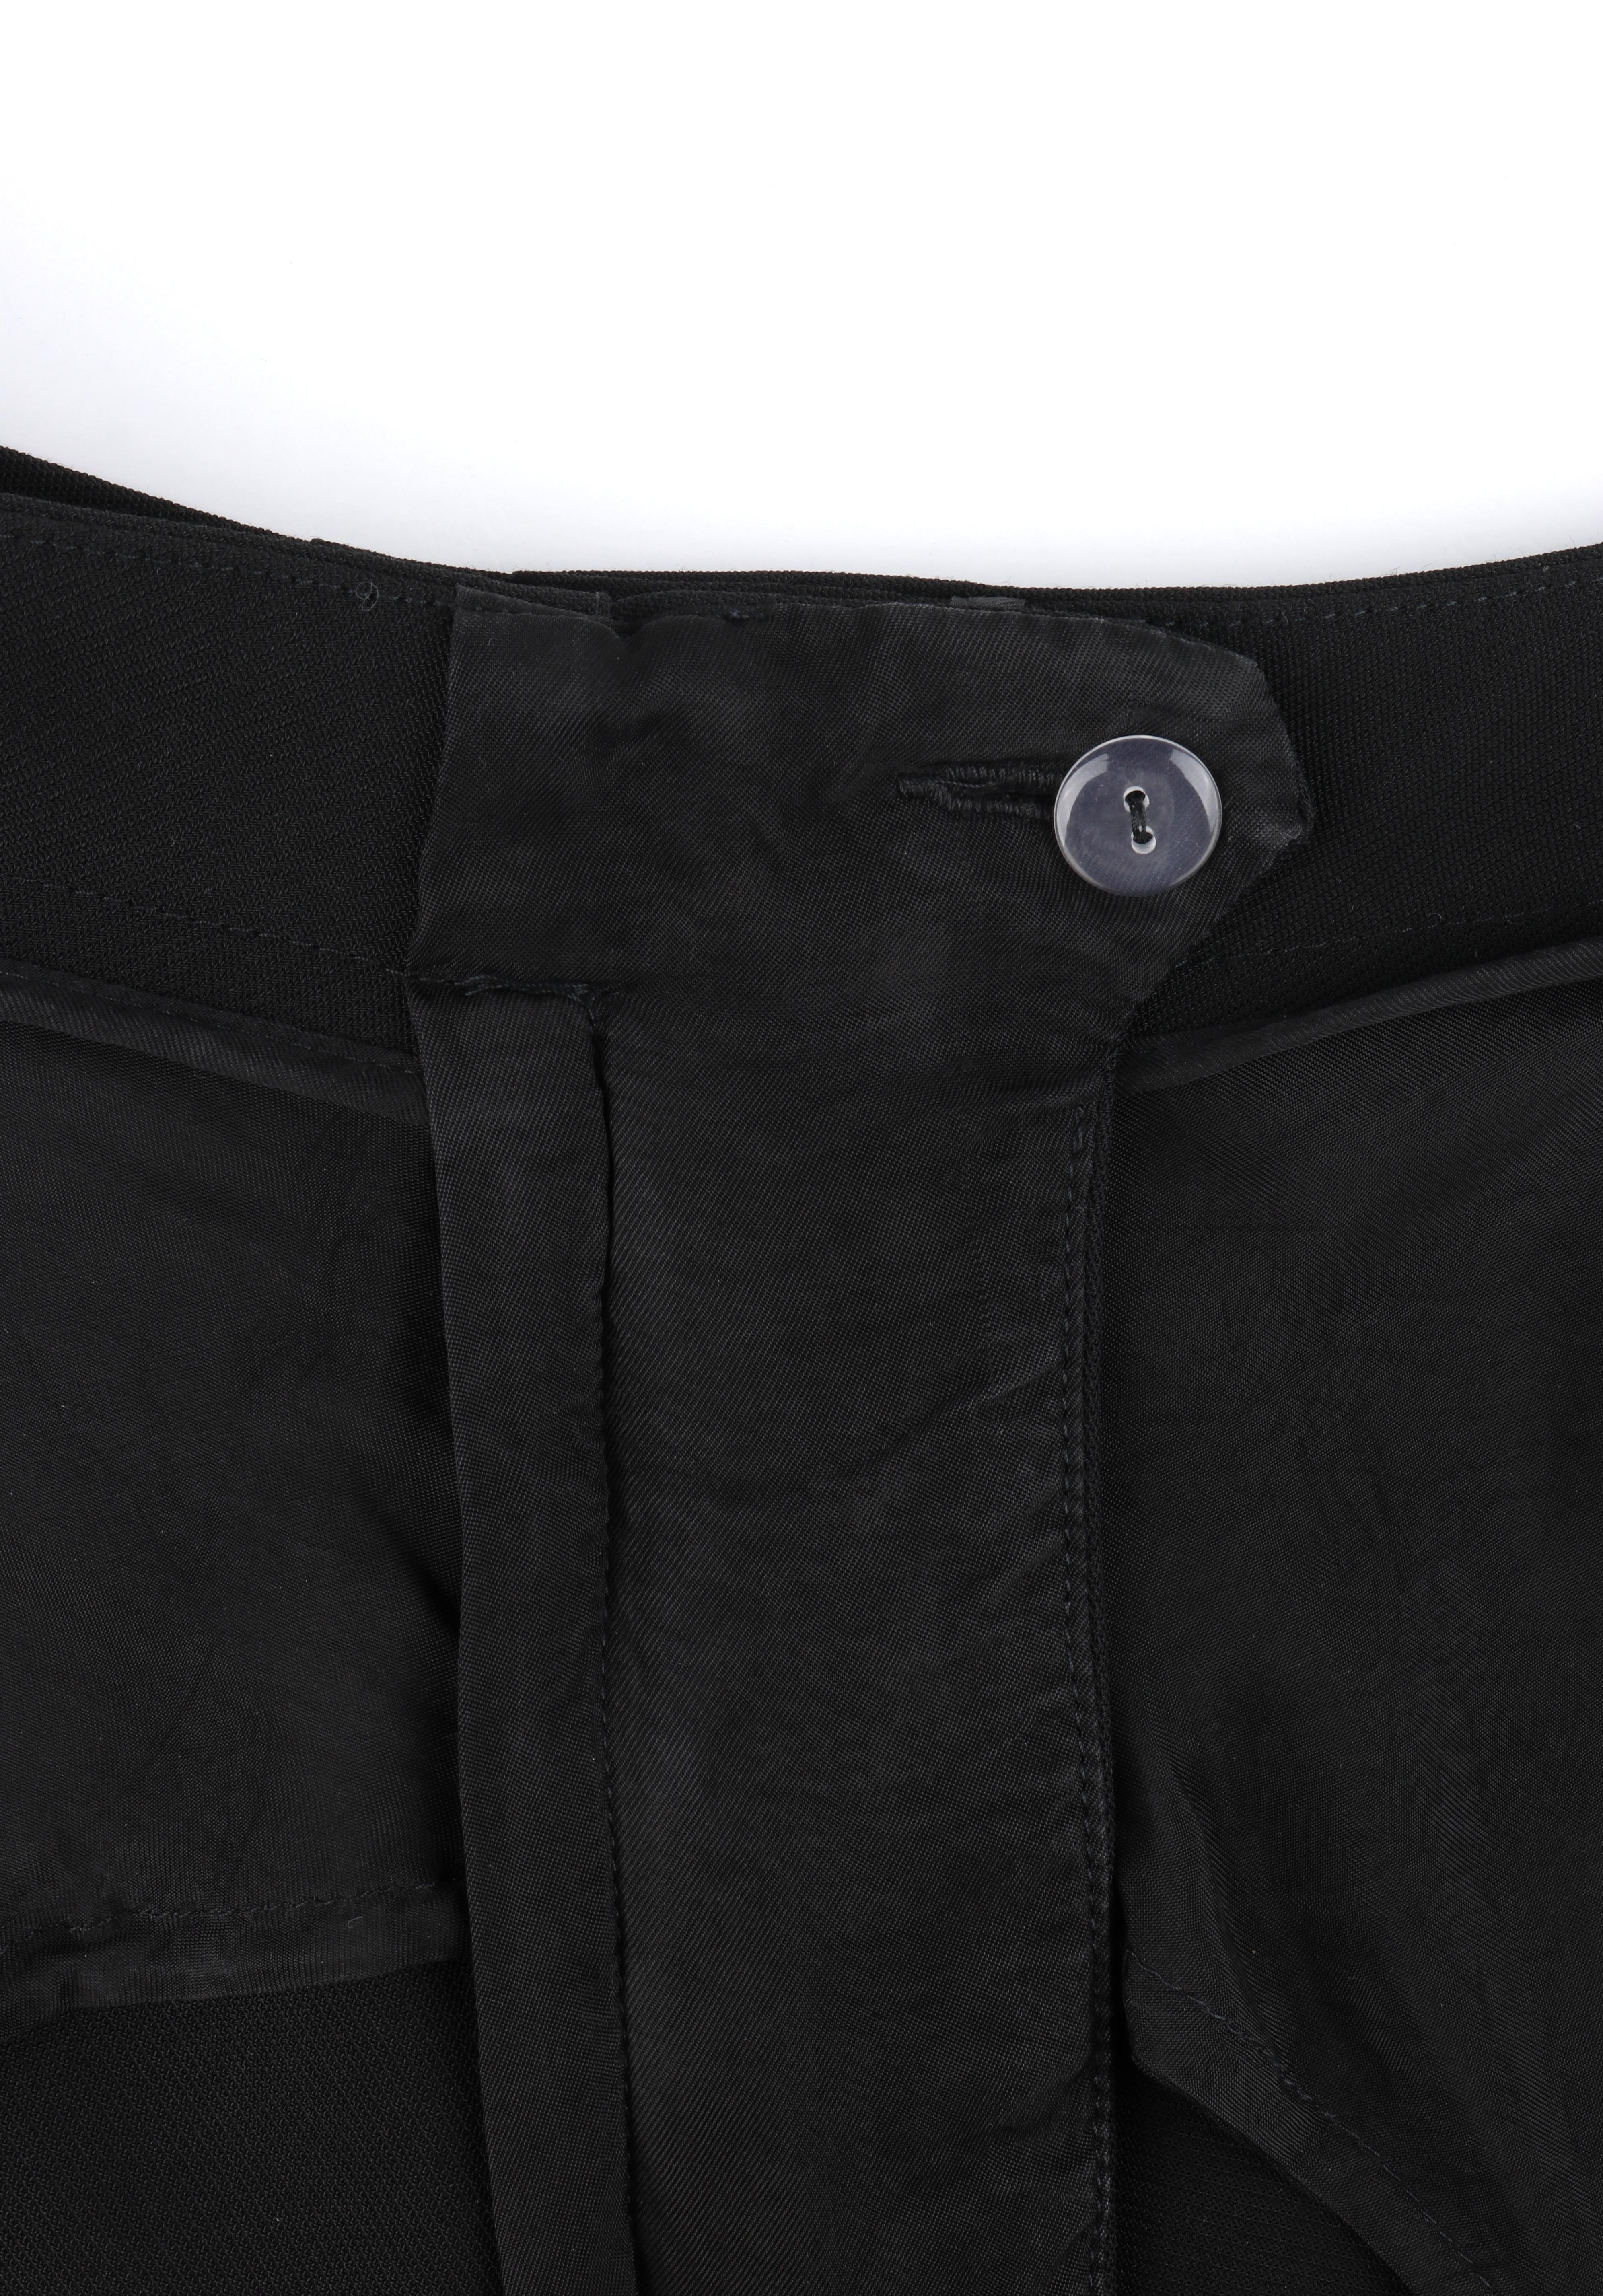 ACNE STUDIOS c.2021 Black Wool Tailored Four Pocket Bermuda Shorts For Sale 4